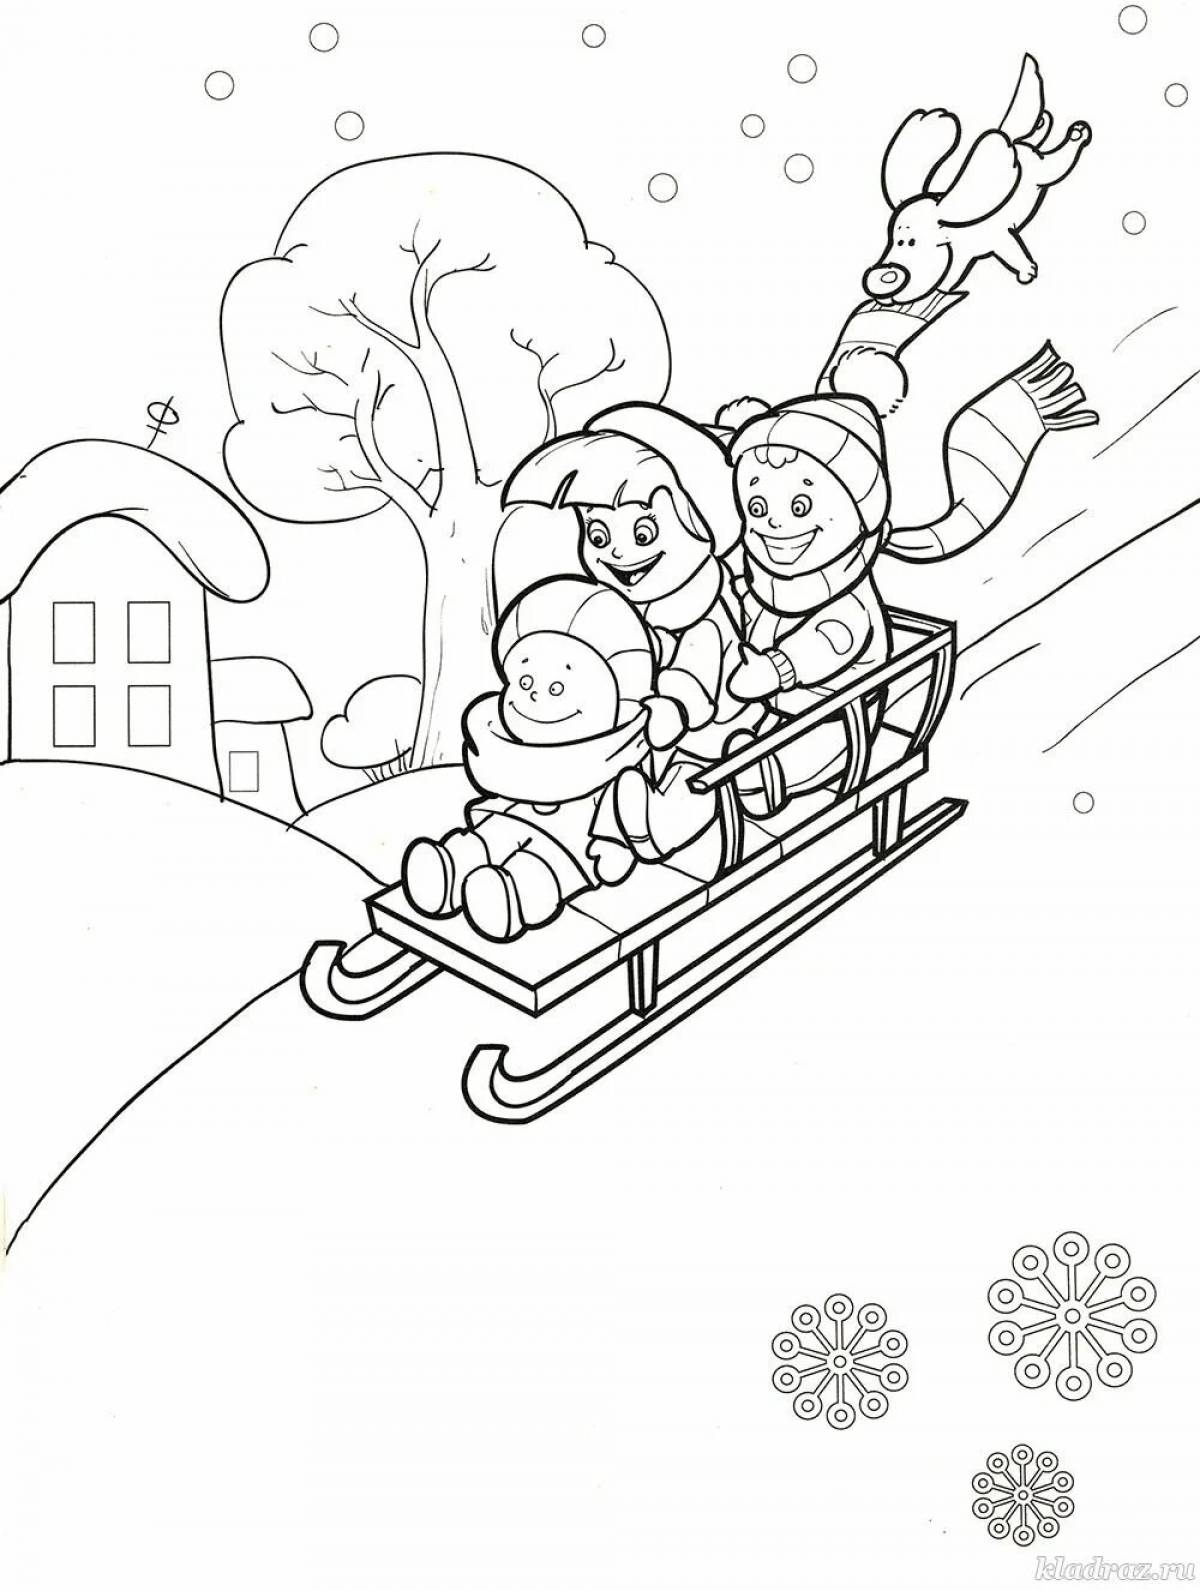 Children's elegant winter road coloring book